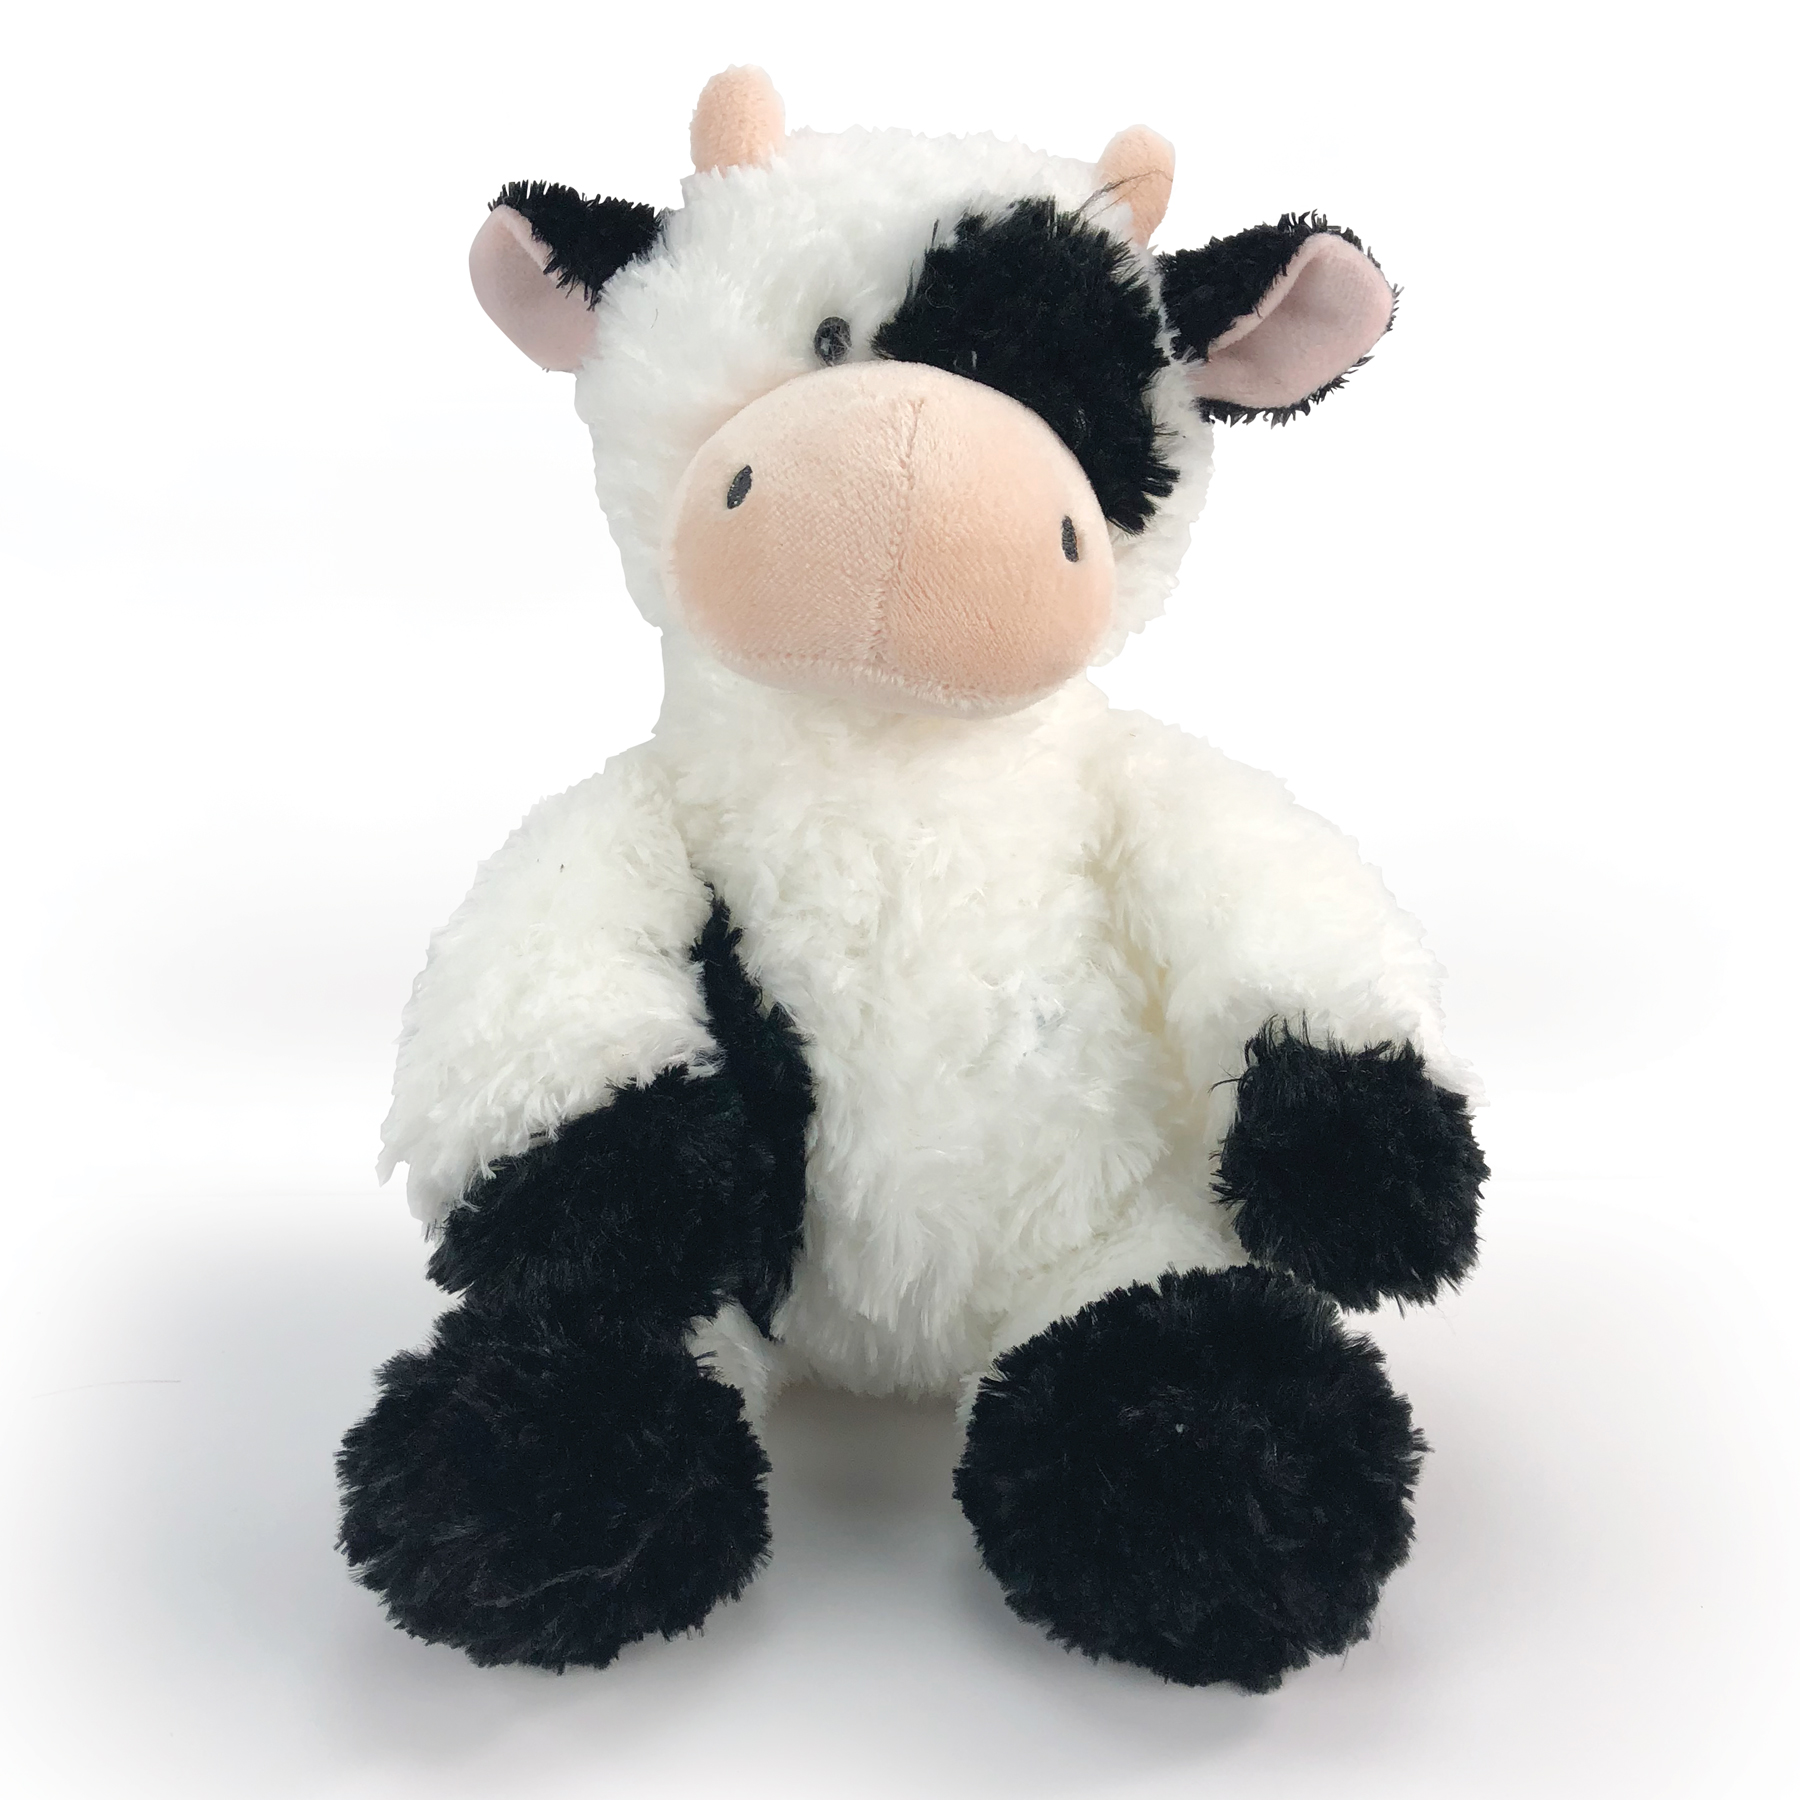 Cow Stuffed Animal | Plush Cow Toy